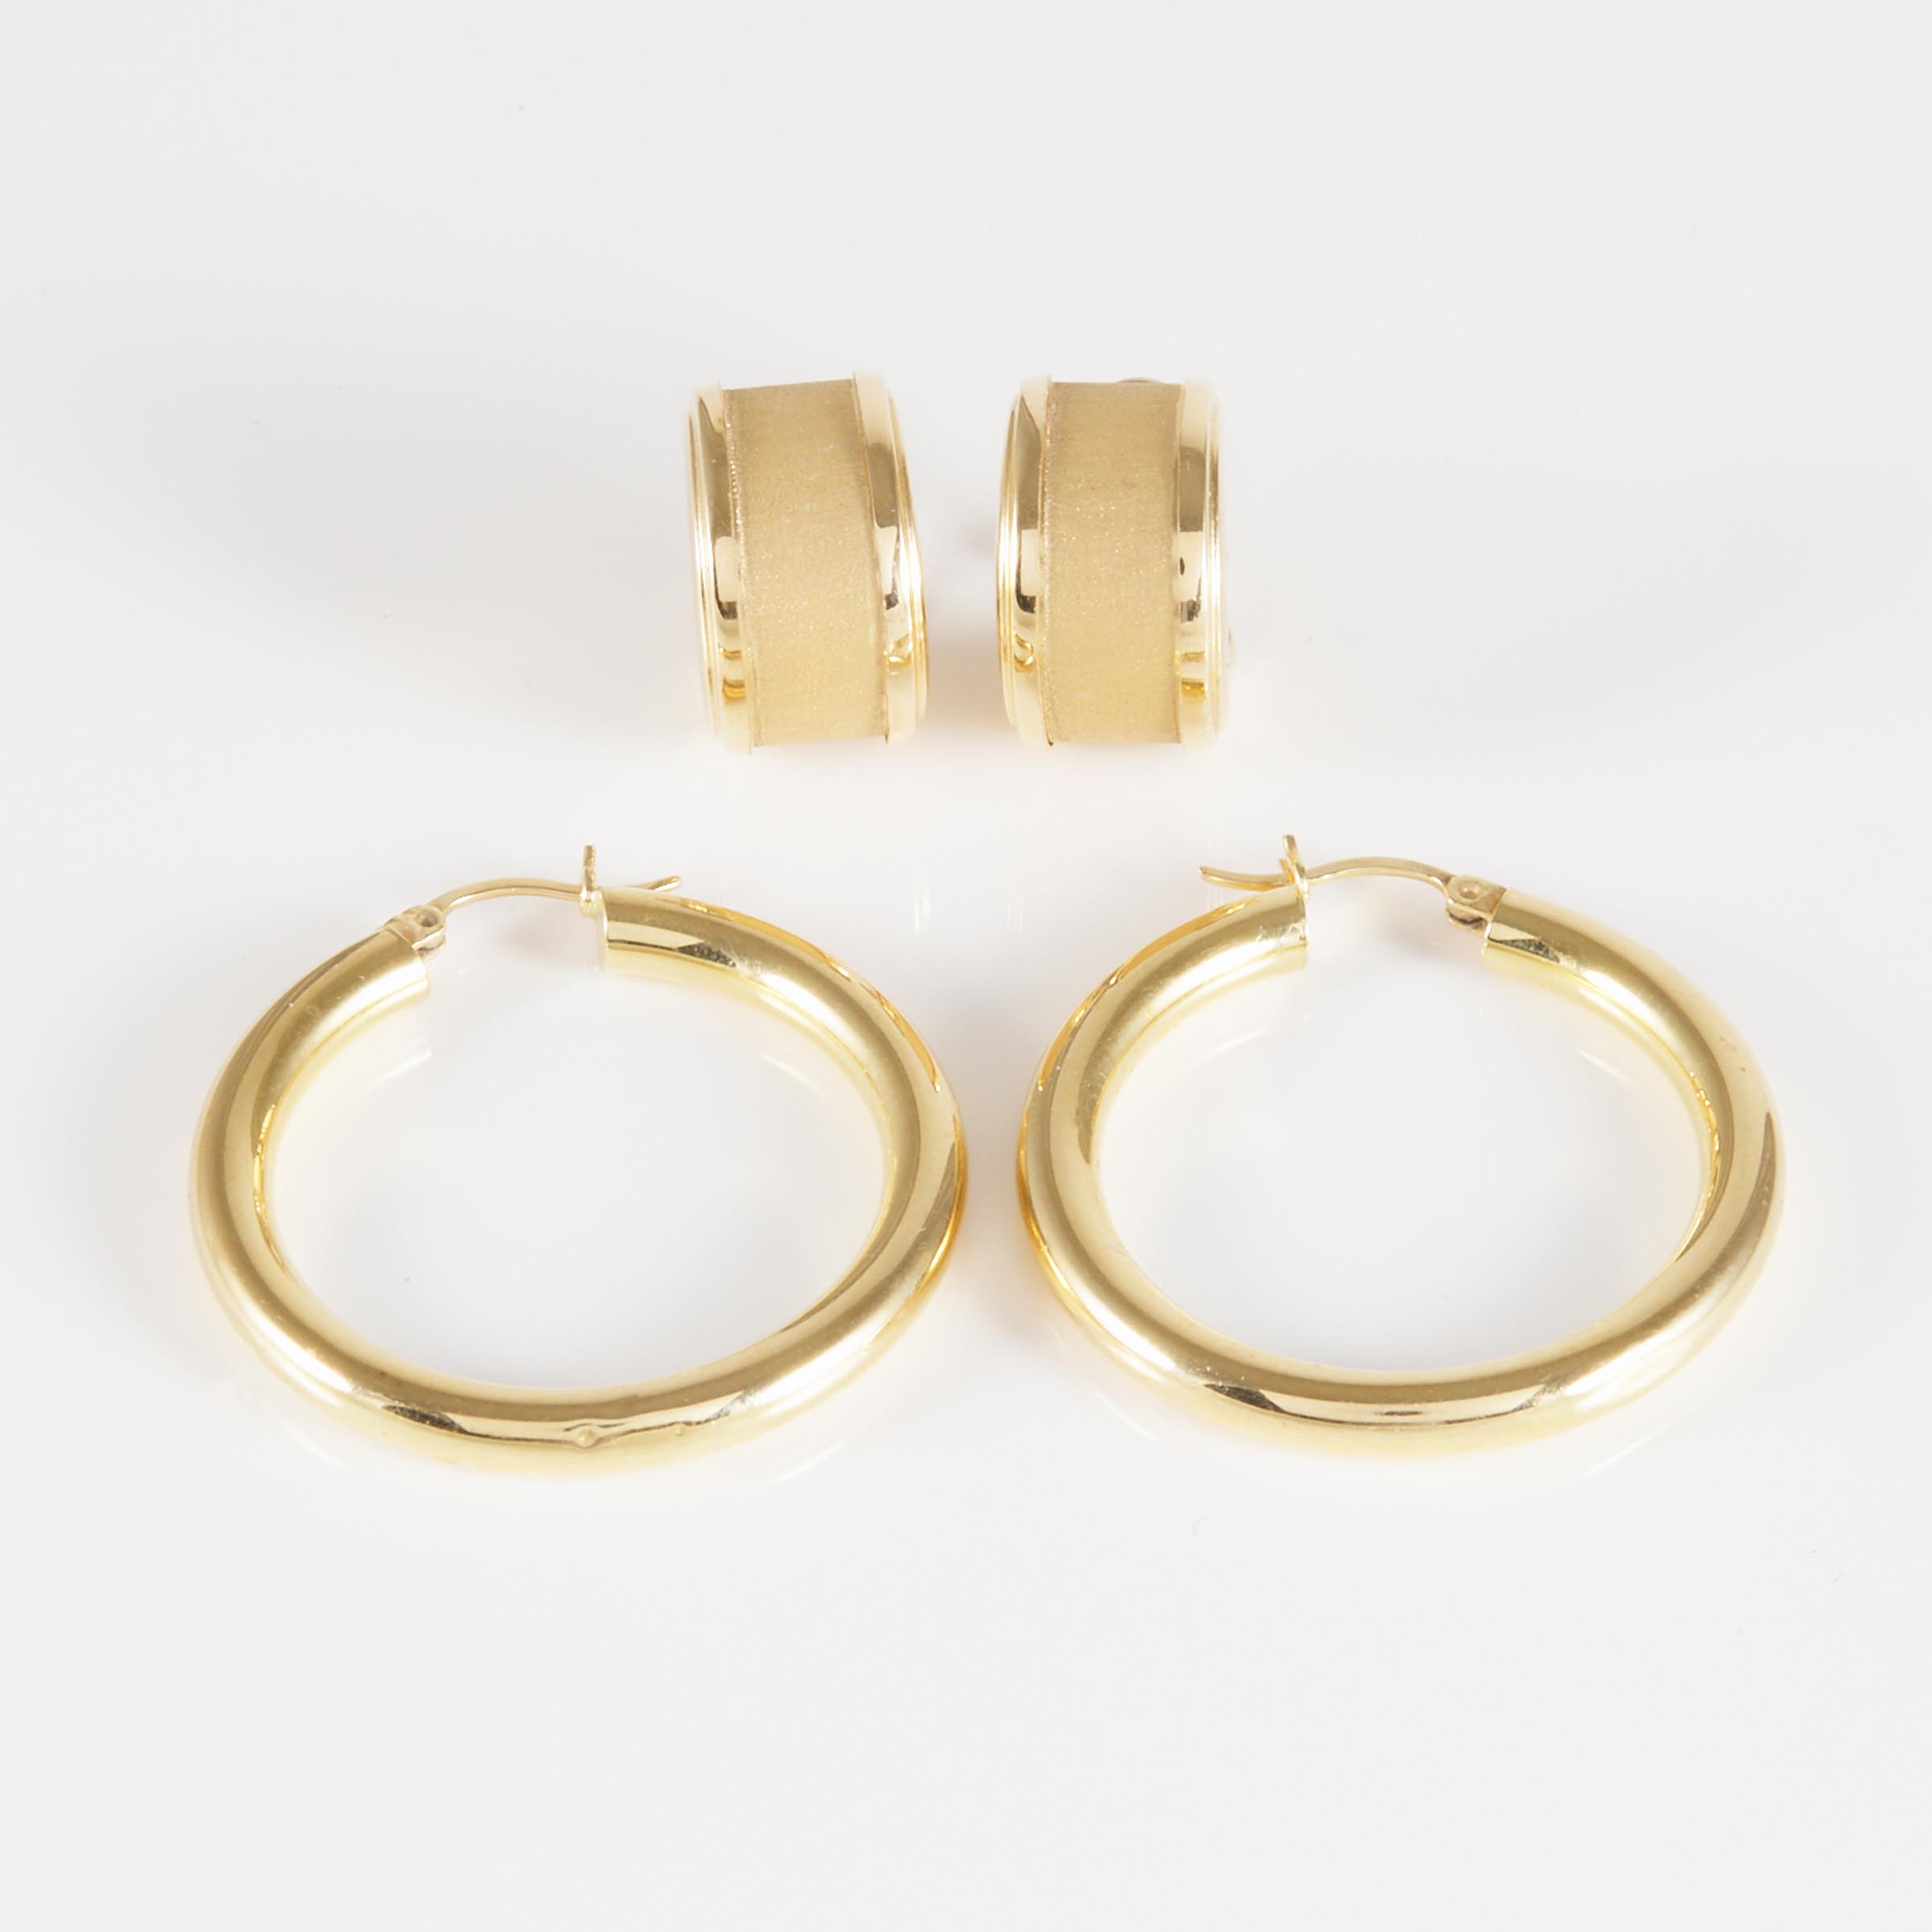 2 Pairs Of Italian 14k Yellow Gold Hoop Earrings